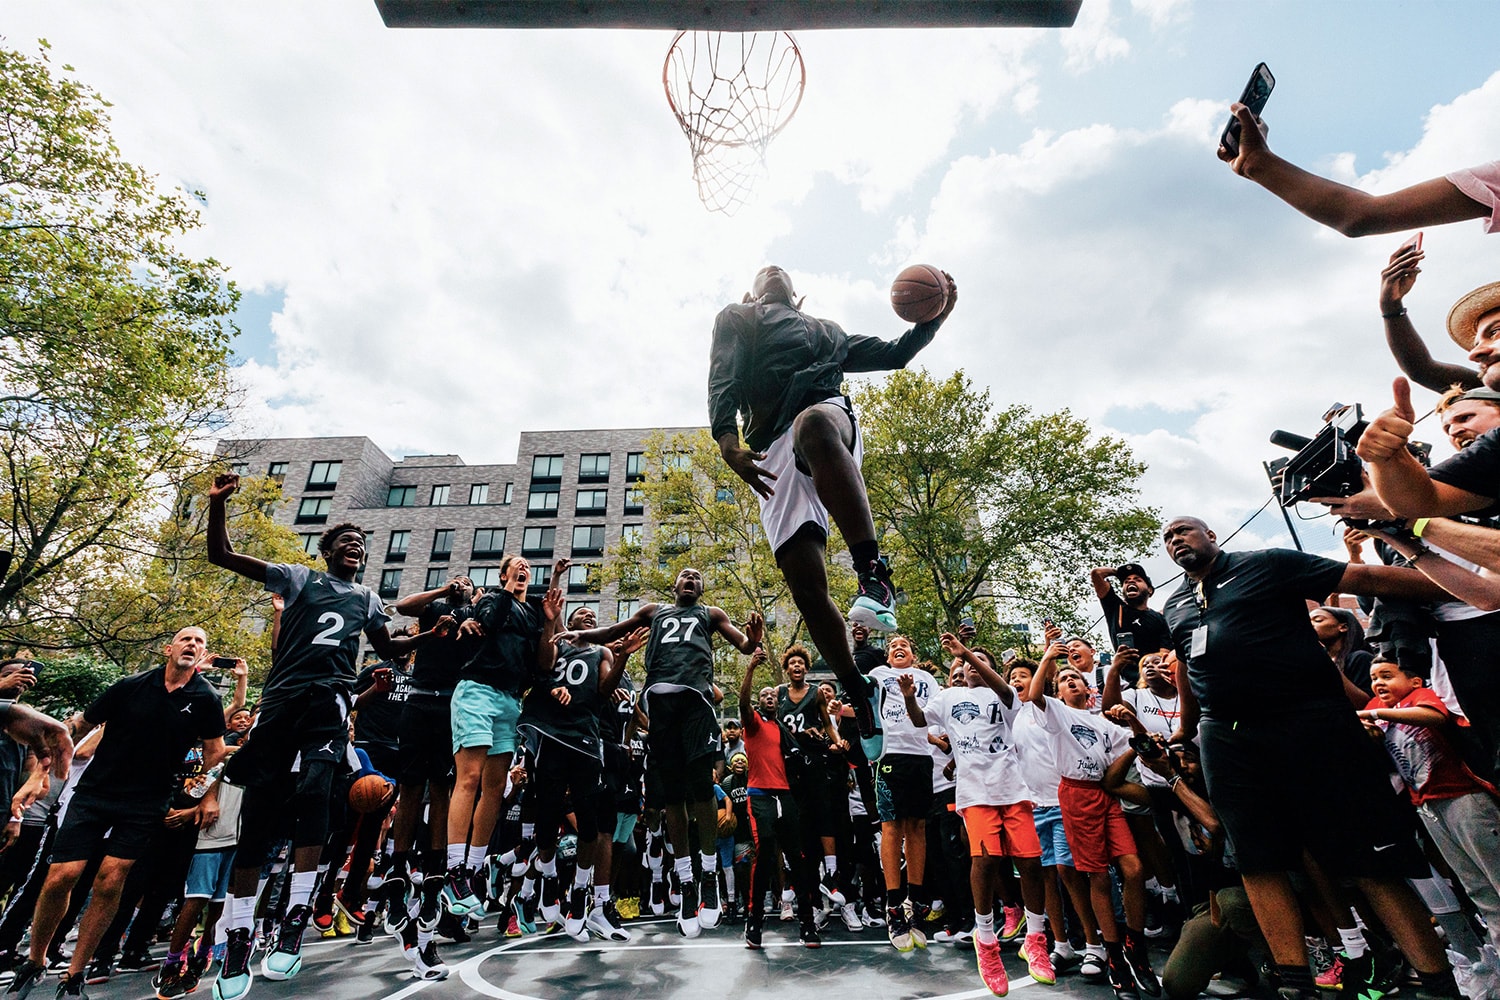 Jordan Brand 正式發佈最新籃球鞋 Air Jordan XXXIV 完整資訊